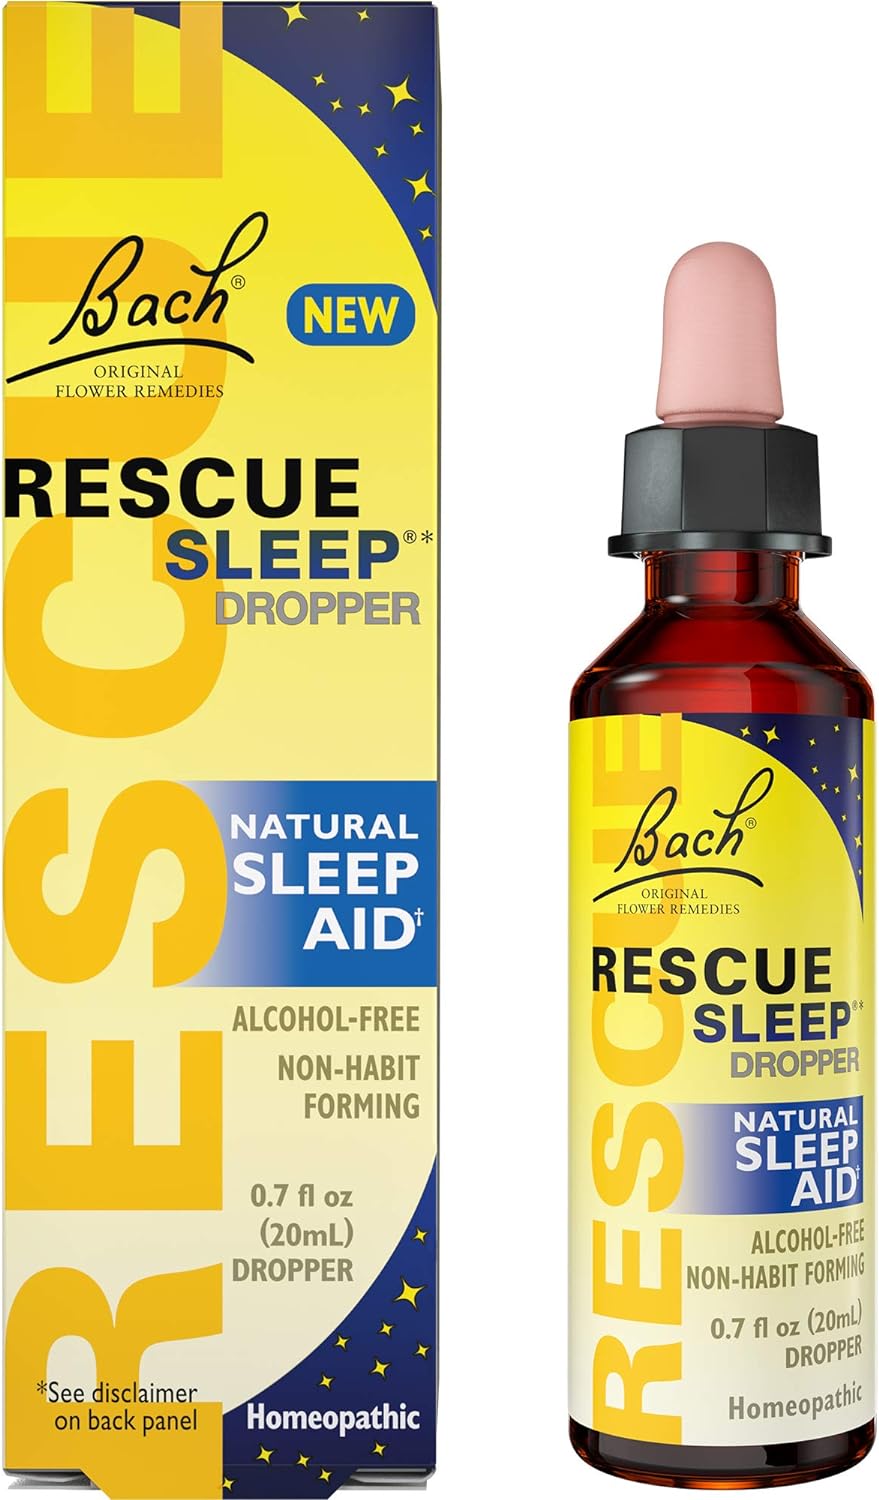 Bach RESCUE SLEEP Dropper 20mL, Natural Sleep Aid, Homeopathic Flower Essence, Free of Melatonin, Sugar, & Gluten, Family-Friendly, Non-alcohol Formula